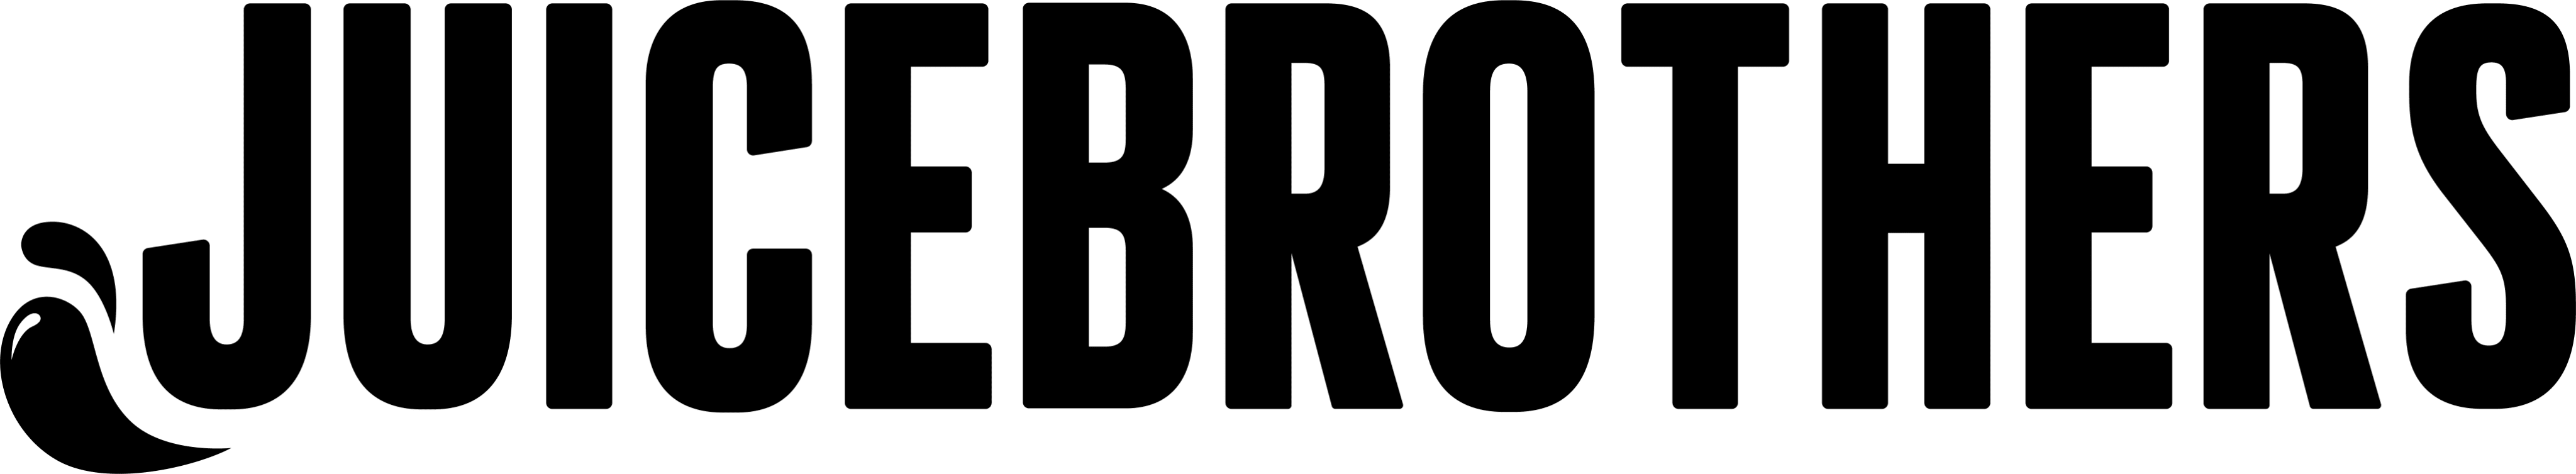 Juicebrothers logo